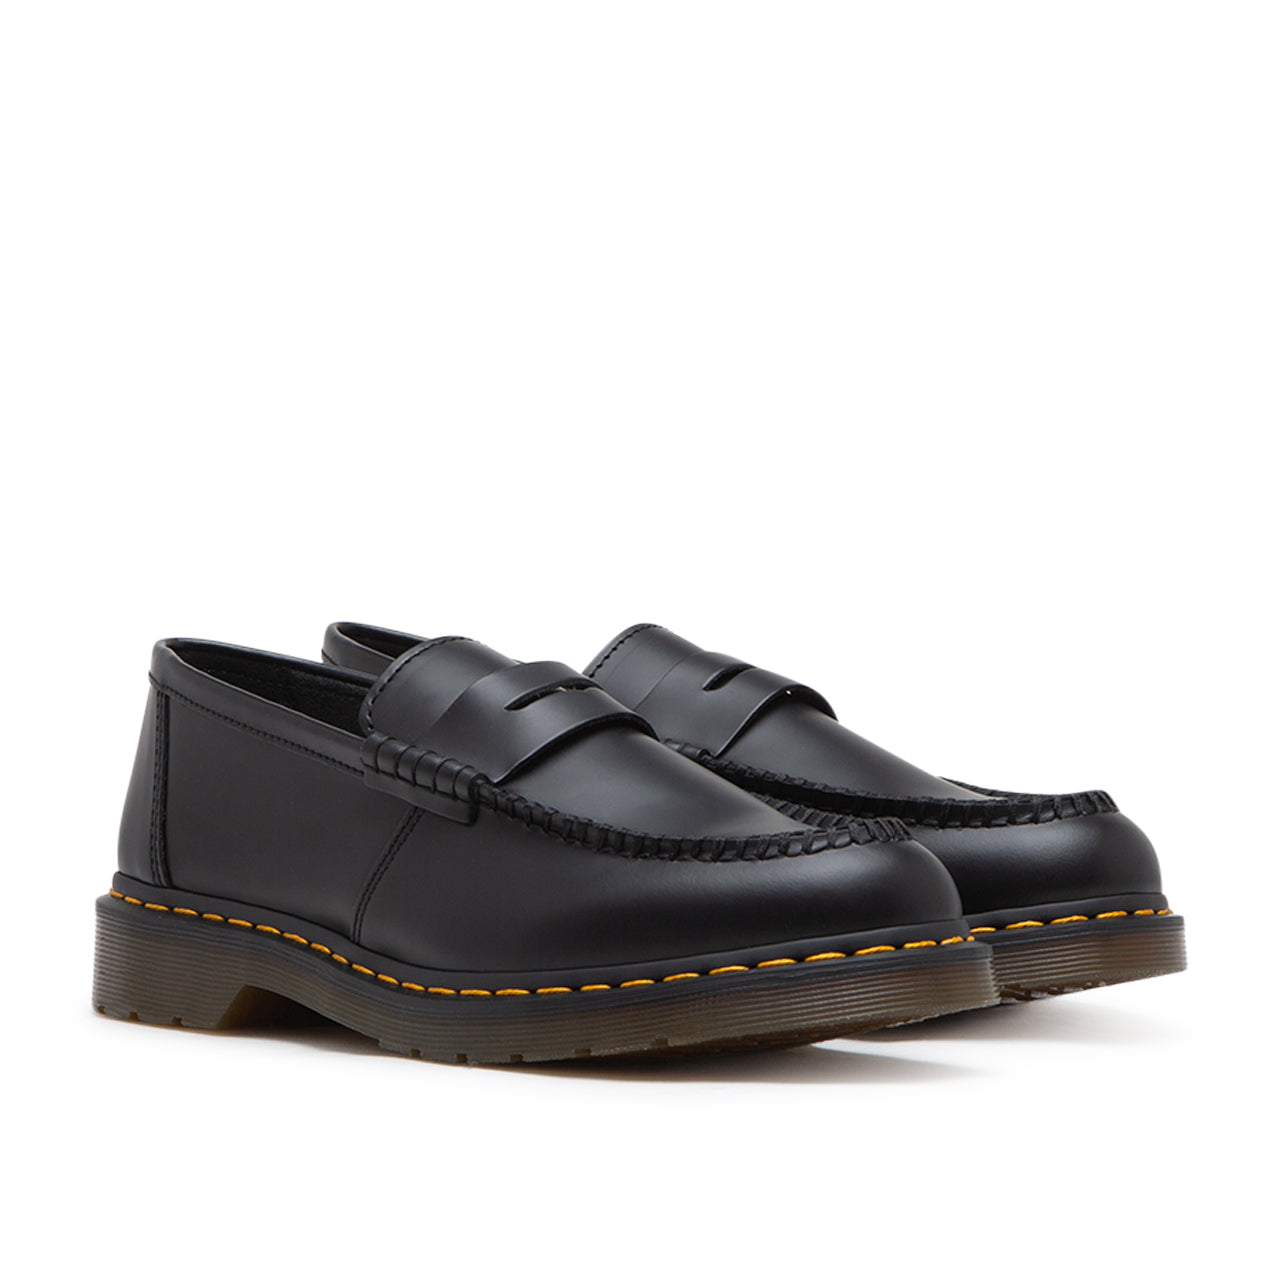 Dr. Martens Shoe Penton Smooth Leather Loafers (Schwarz)  - Cheap Juzsports Jordan Outlet